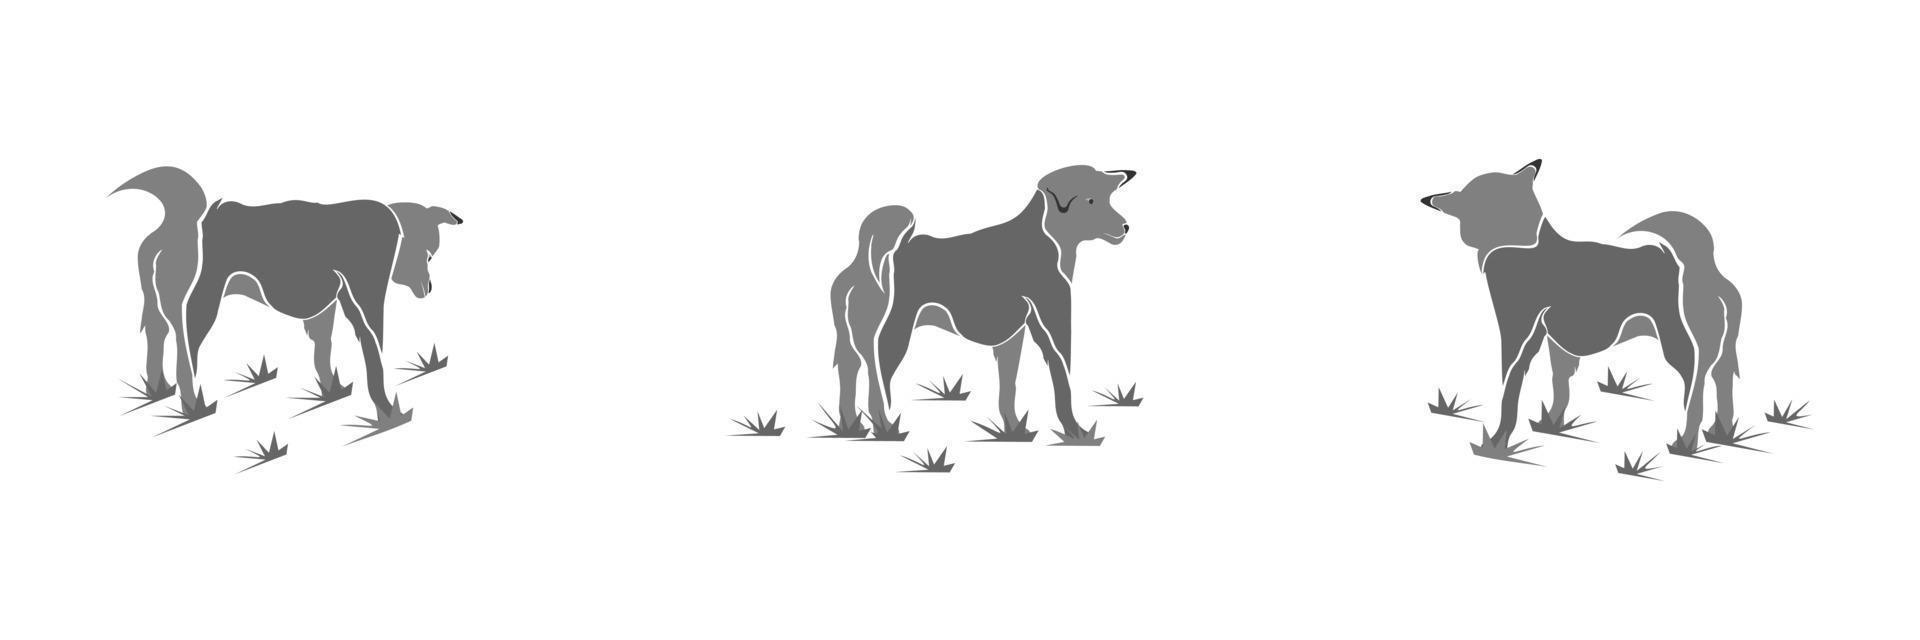 karikaturhund lokalisierte vektorillustration vektor